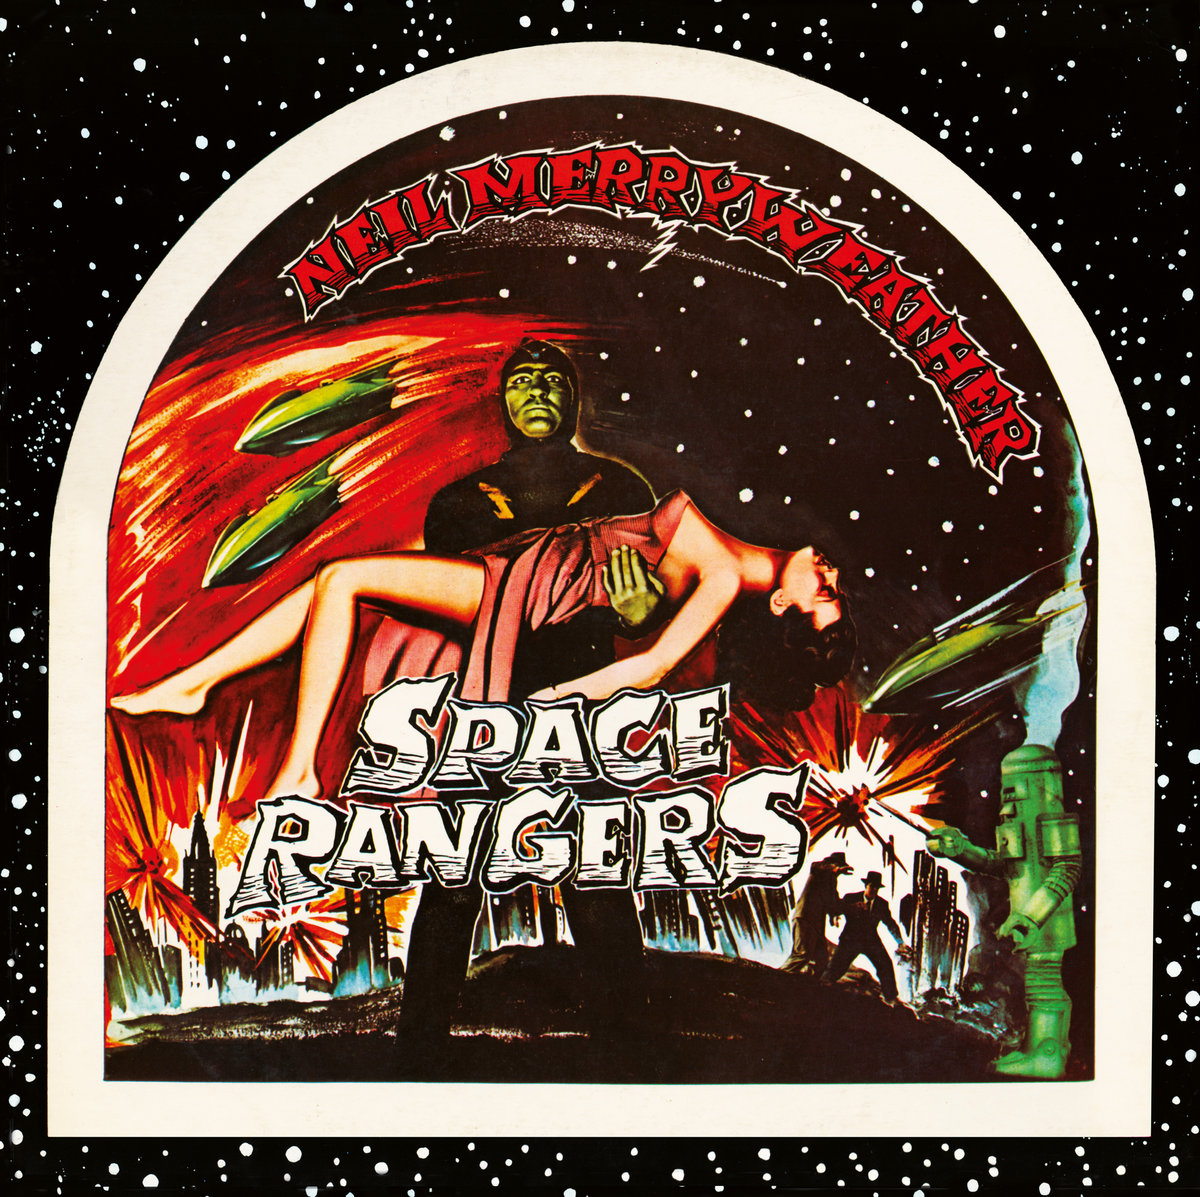 Neil Merryweather & The Space Range - Space Rangers (Incl 7´) - LP